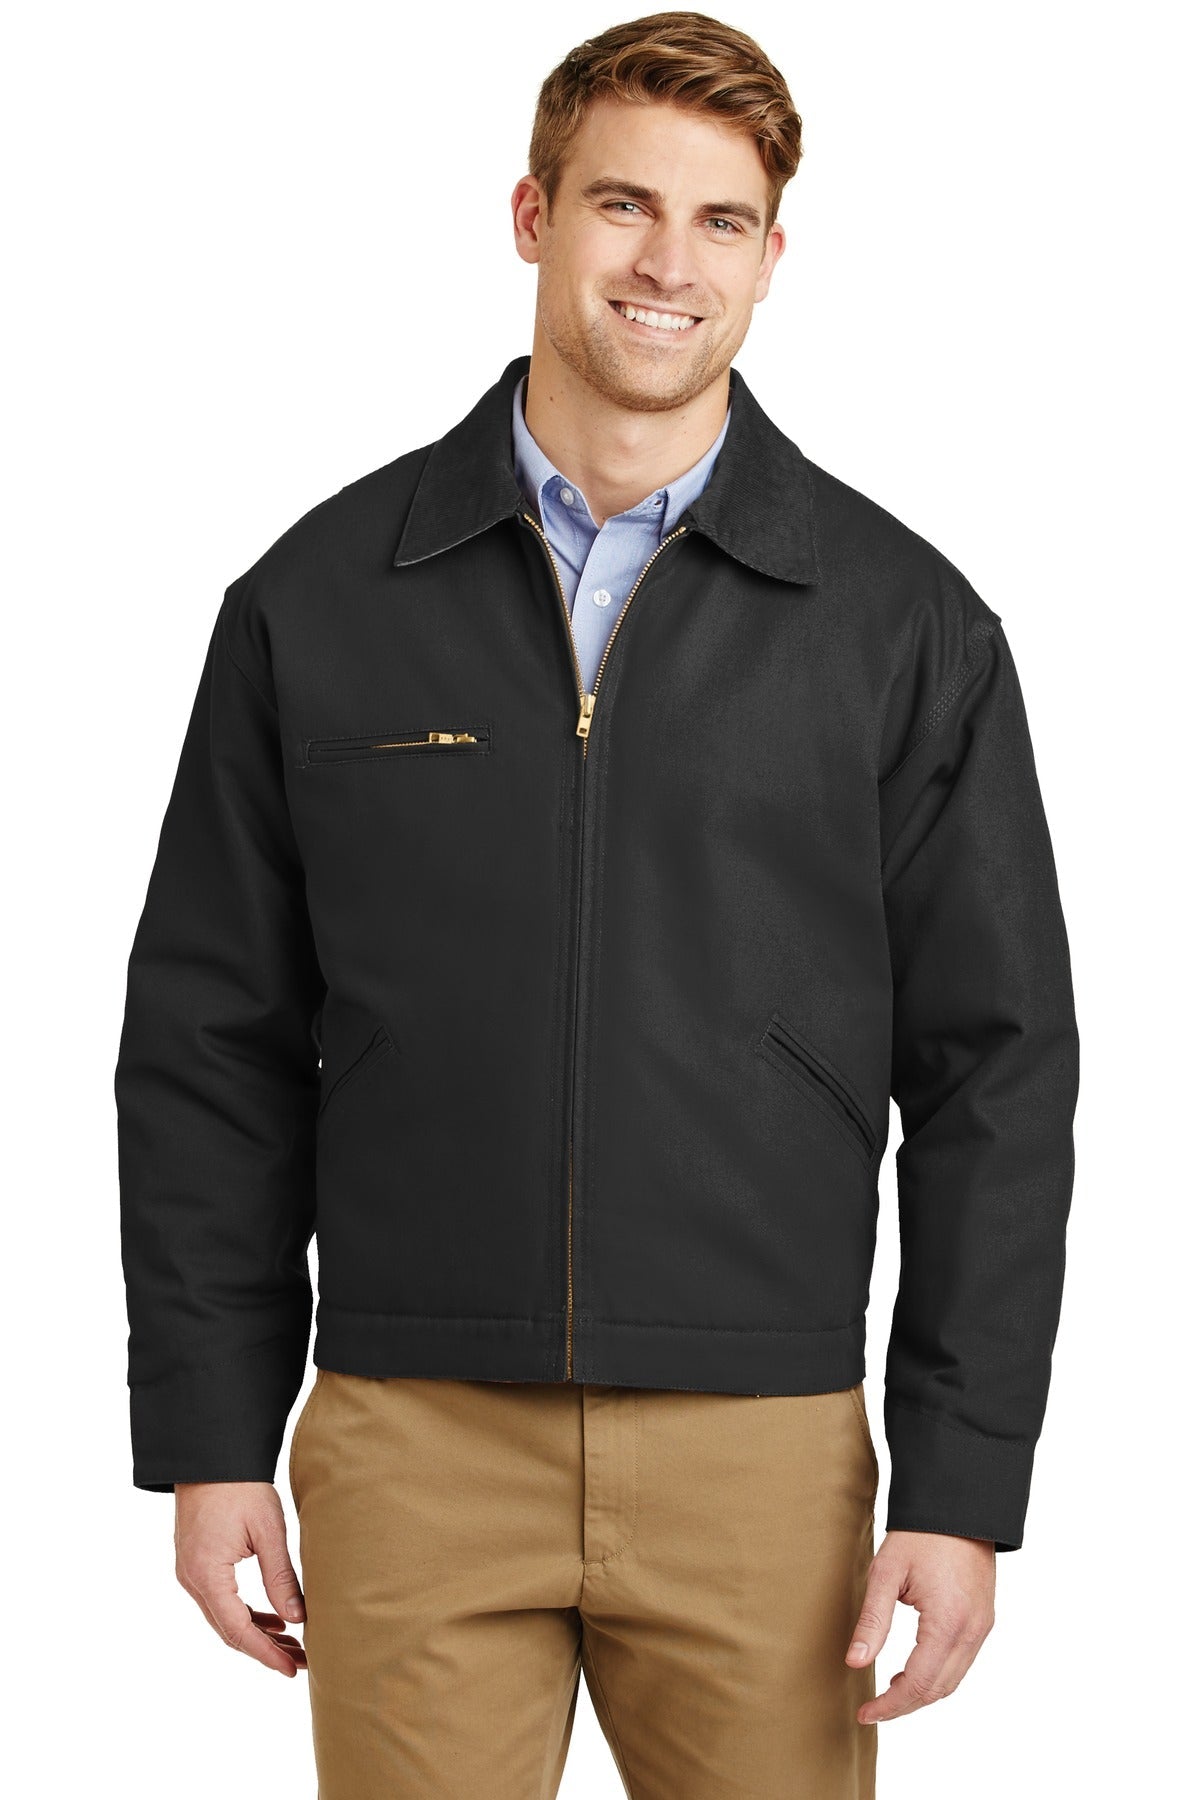 CornerStone® - Duck Cloth Work Jacket. J763 - DFW Impression